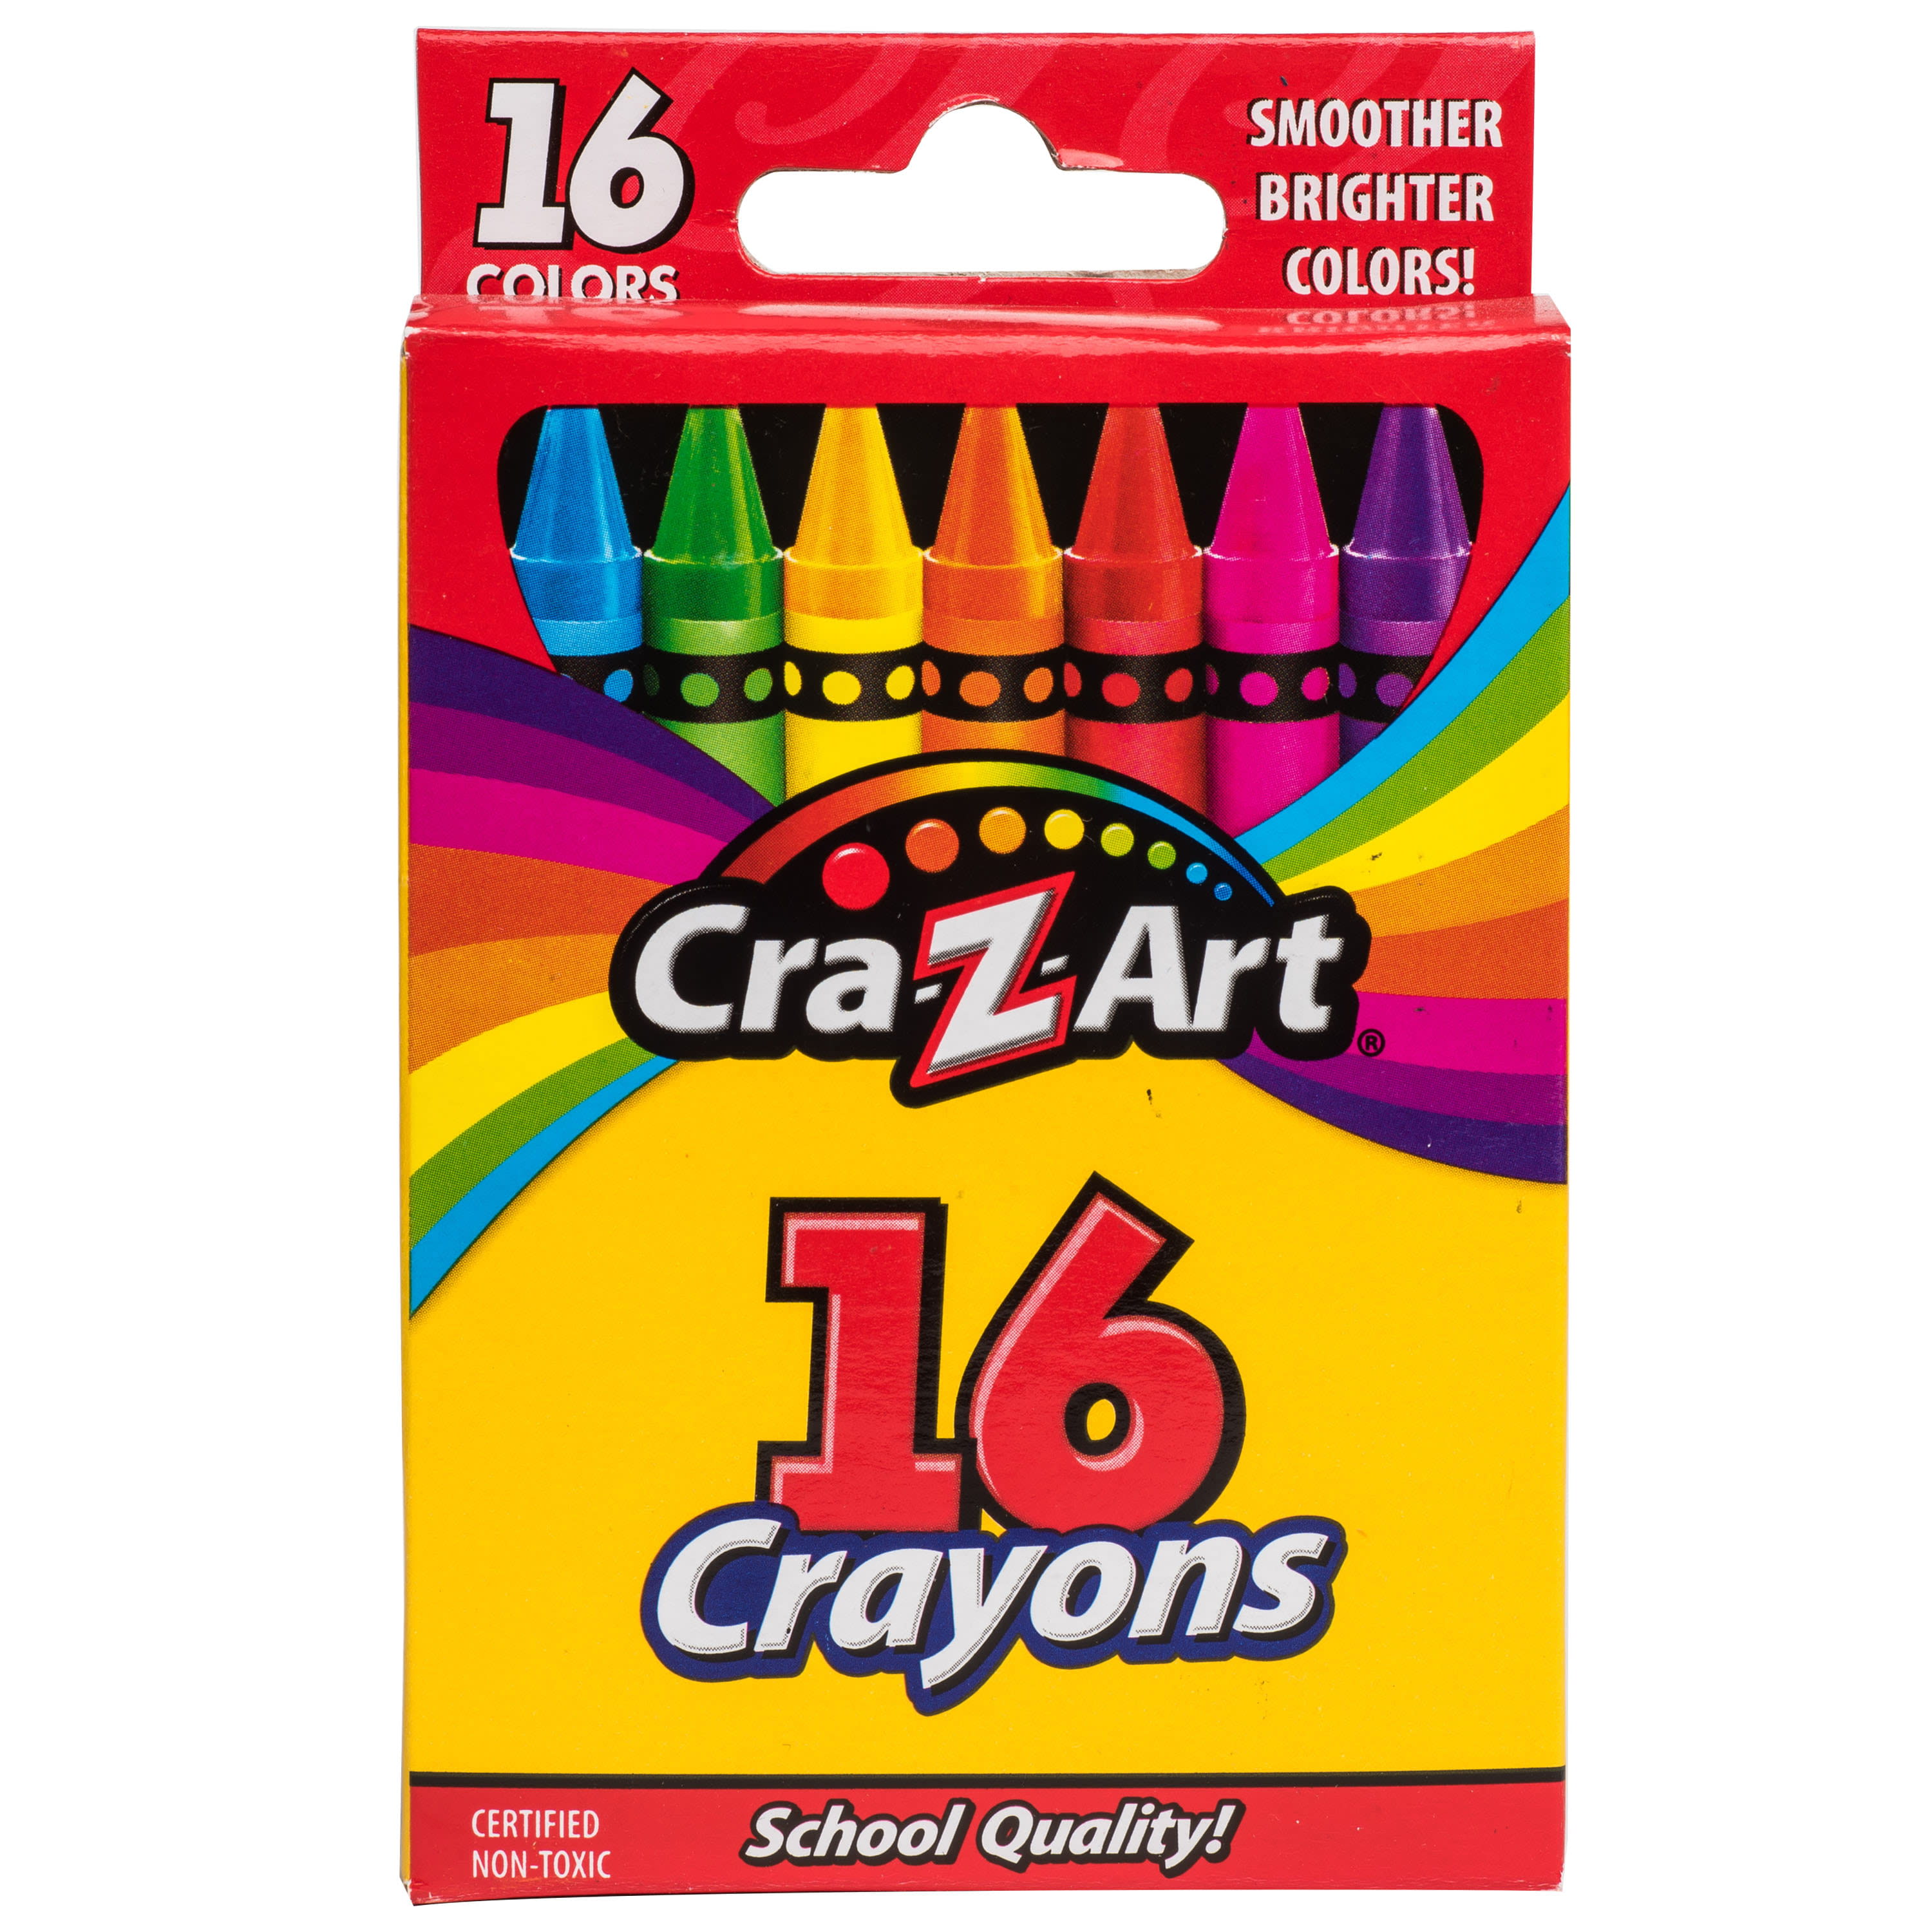 Cra-Z-Art Mini Twist Up Crayons , 20 Count